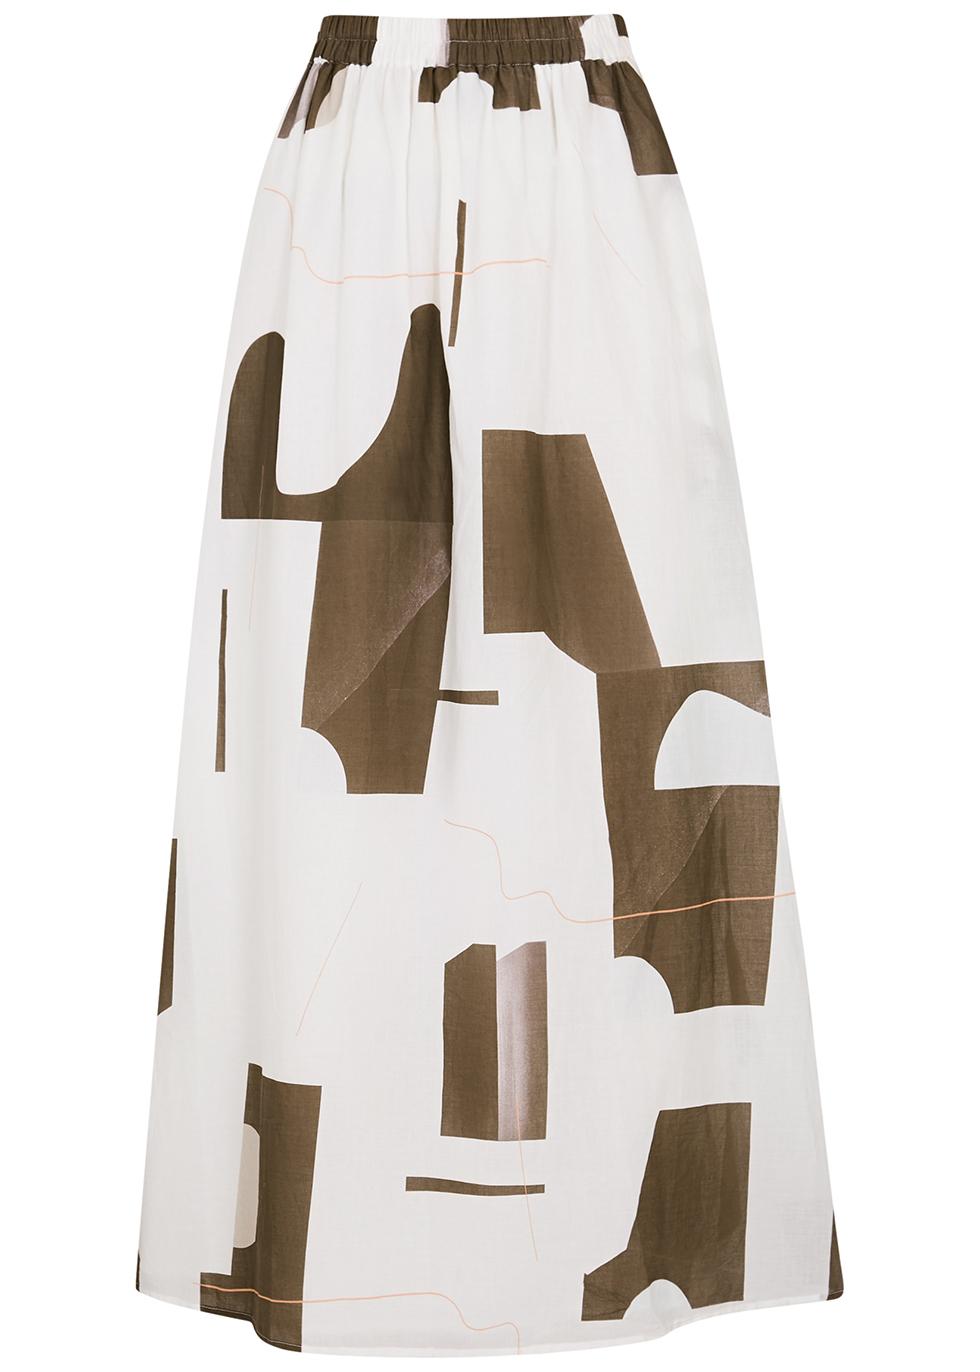 Ocean printed cotton maxi skirt by BIRD&KNOLL